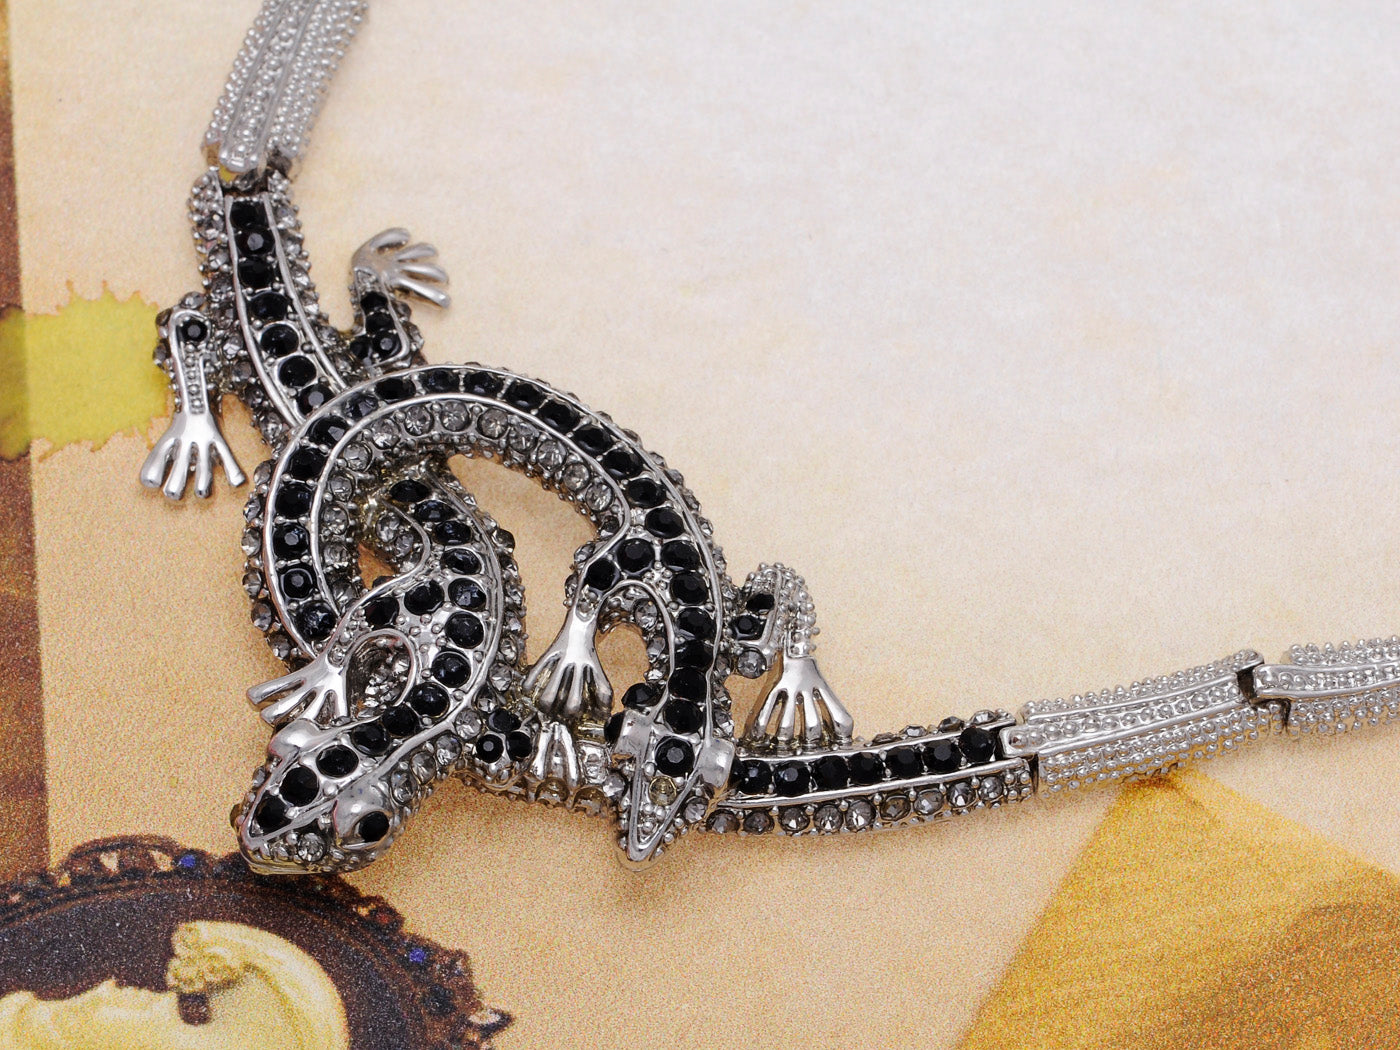 Twin Jet Blck Lizard Reptile Pair Necklace Earring Set